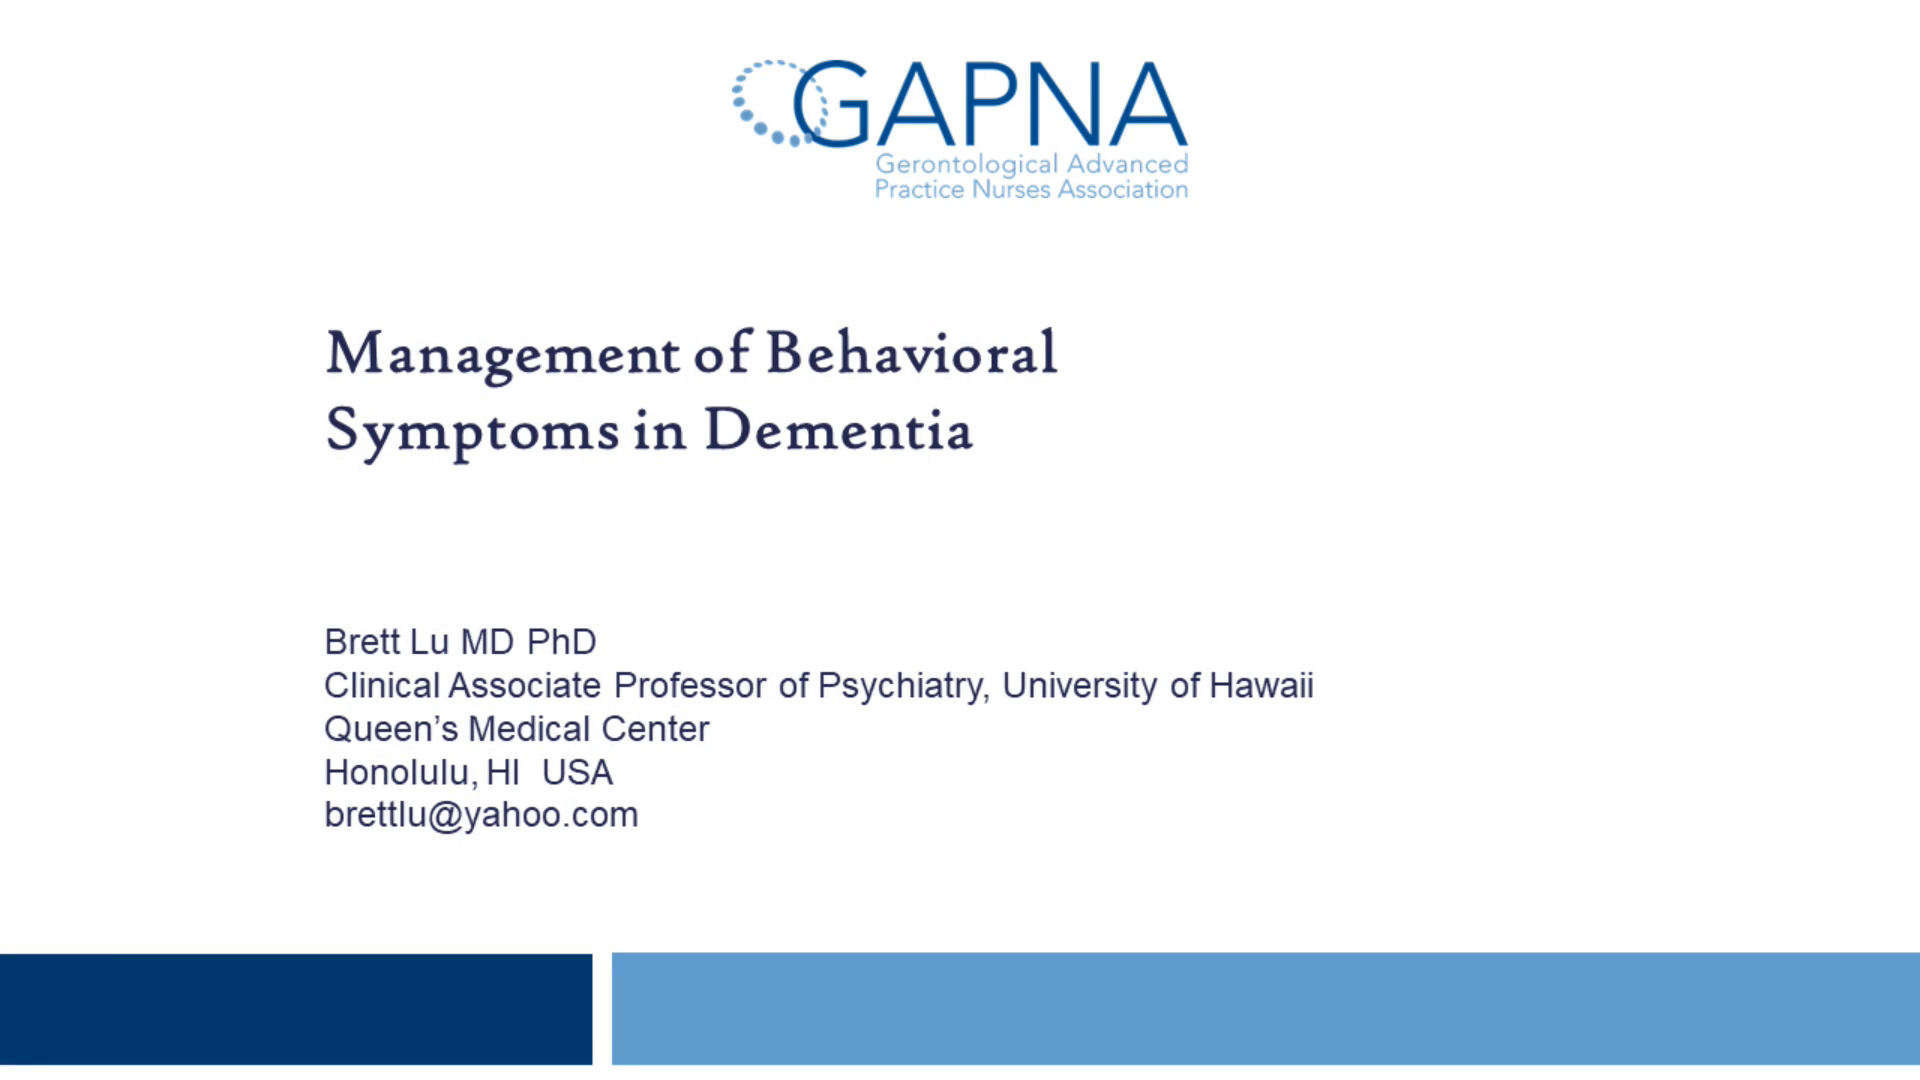 Management of Behavioral Symptoms in Dementia